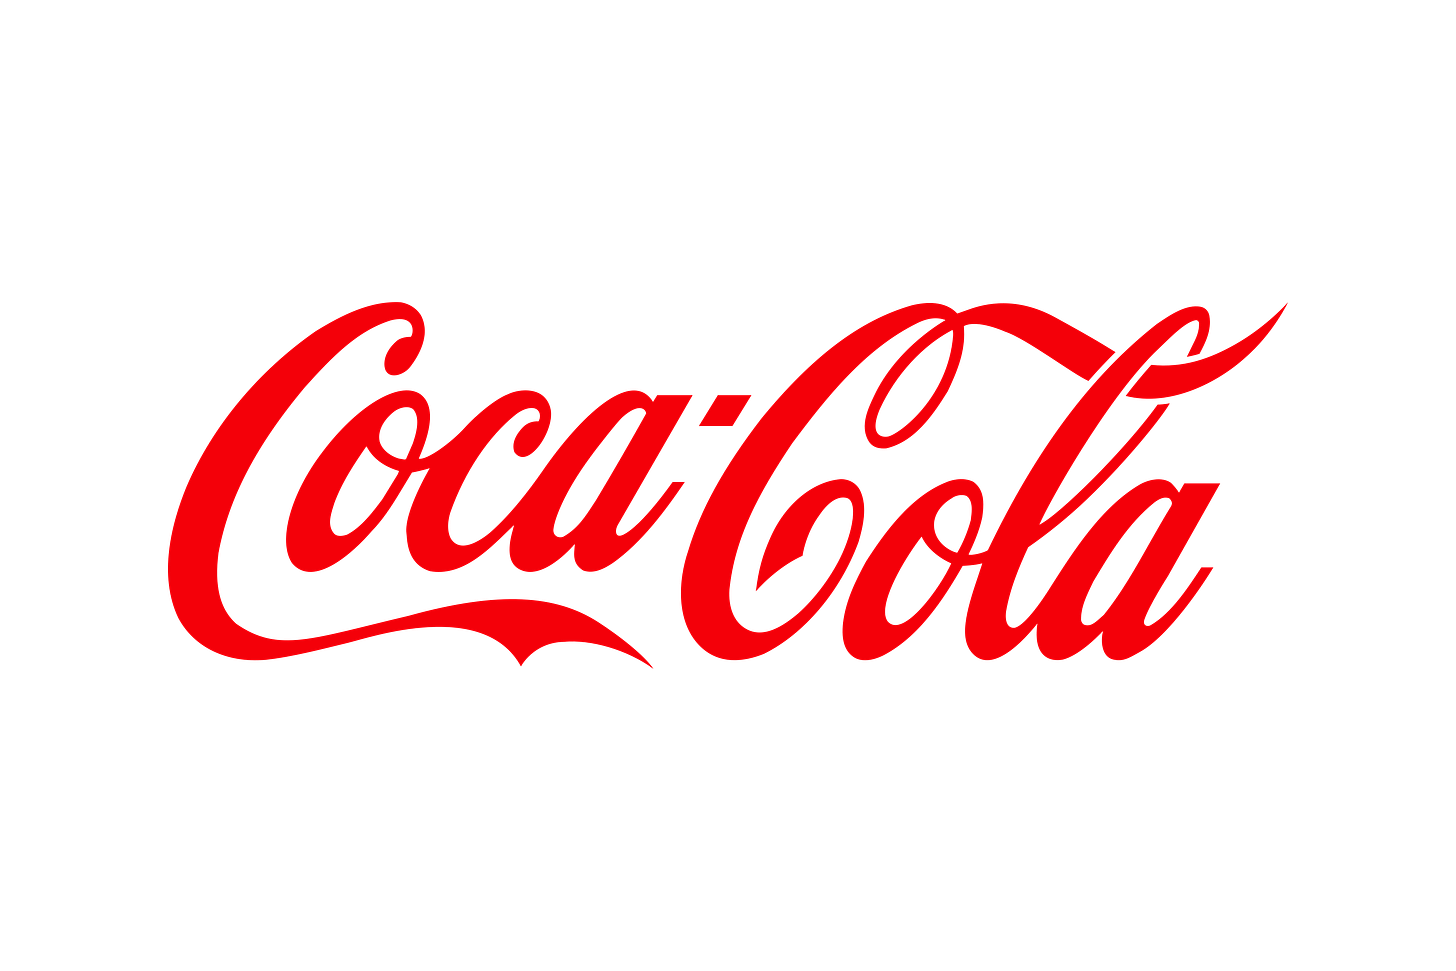 Download Coca-Cola (Coke) Logo in SVG Vector or PNG File Format - Logo.wine